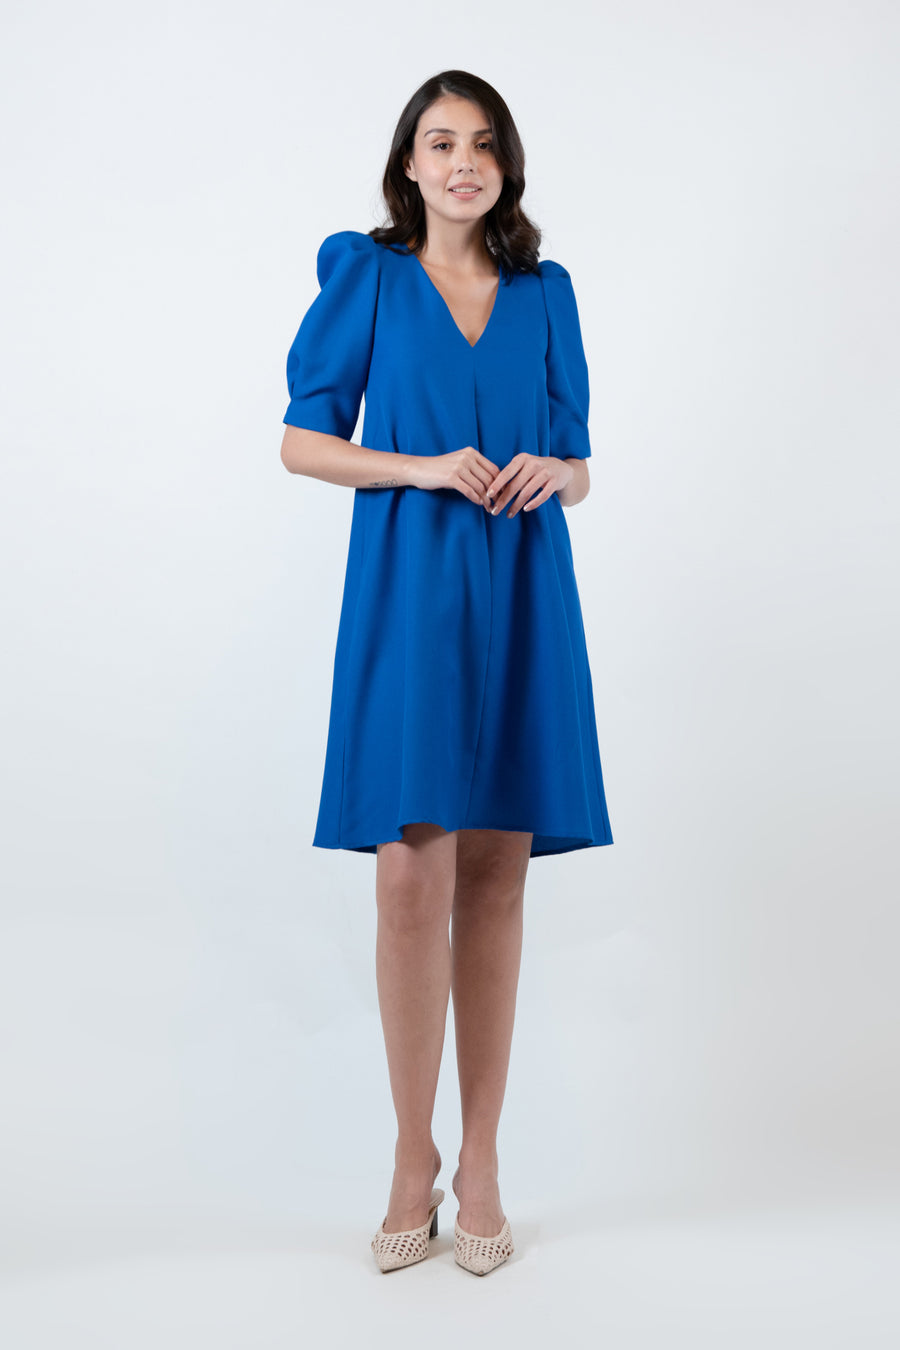 AMEPELA Dress with Full Sleeve (Cobalt Blue)